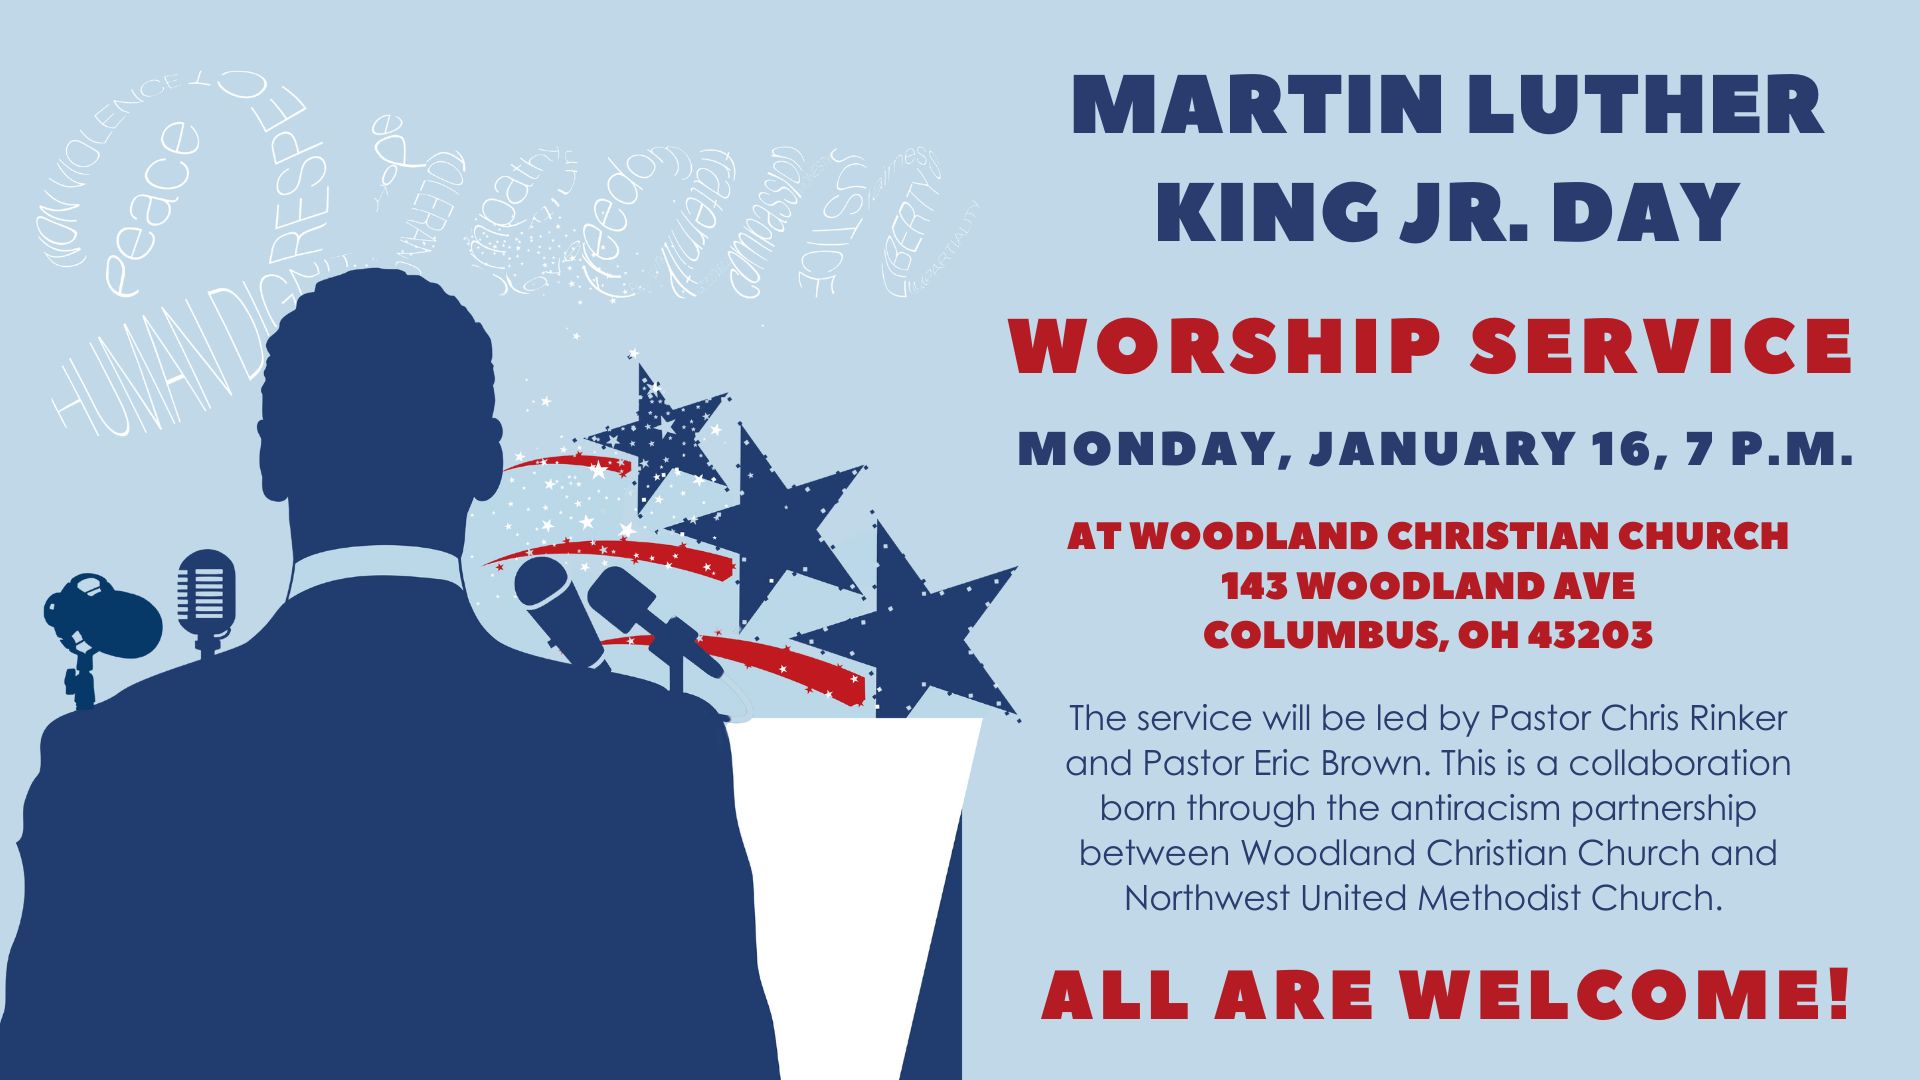 Martin Luther King Day Worship Service, Columbus, Ohio, United States